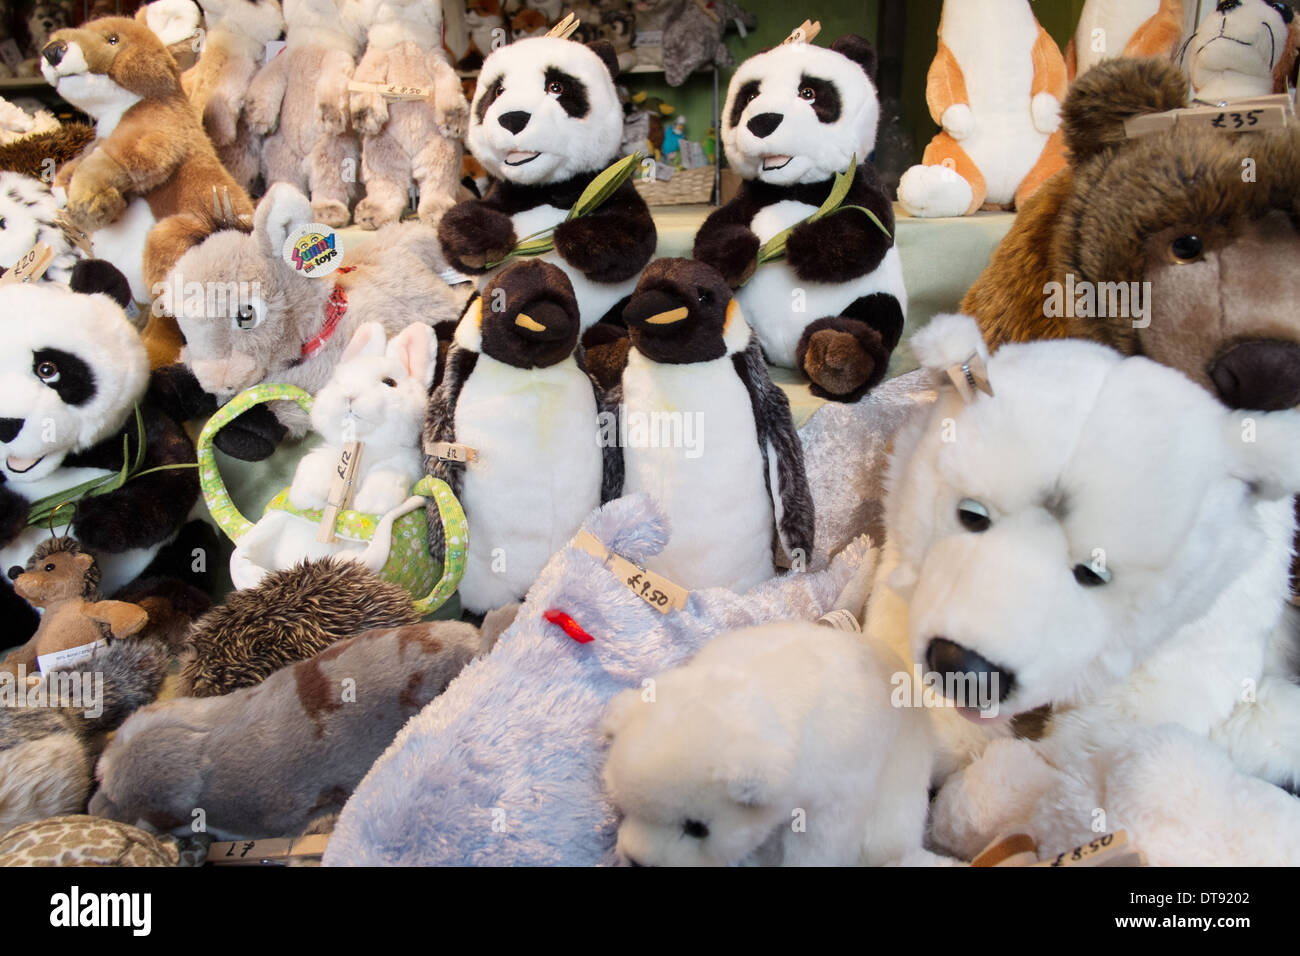 Birmingham Frankfurt Christmas Market 2013 - Market stall with stuffed furry animal figures 2013 Stock Photo